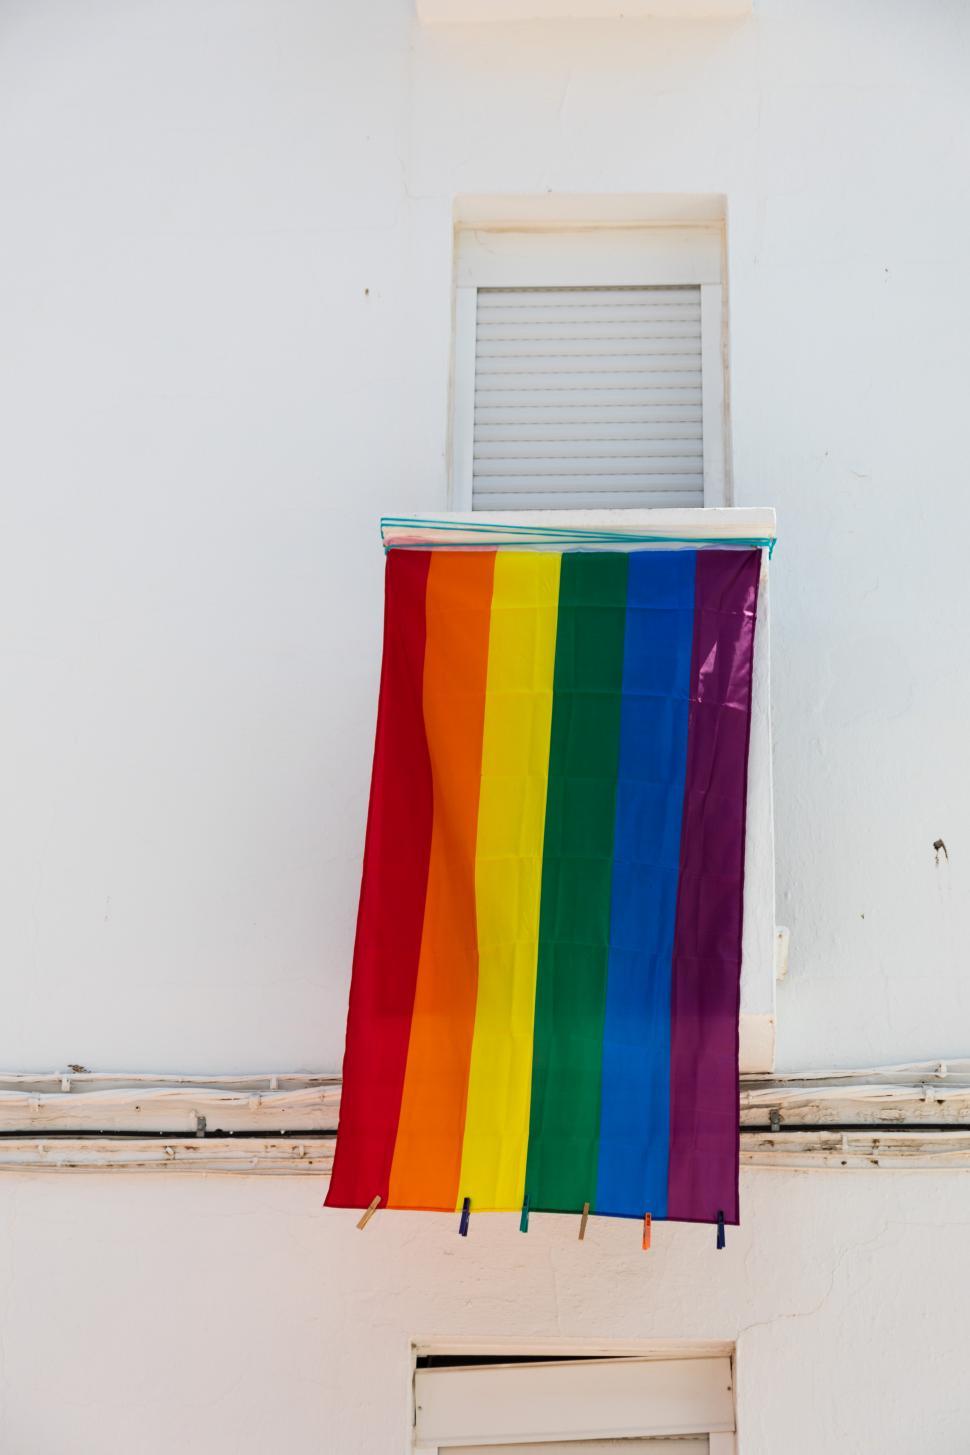 Free Image of rainbow lgtbi flag in a street 